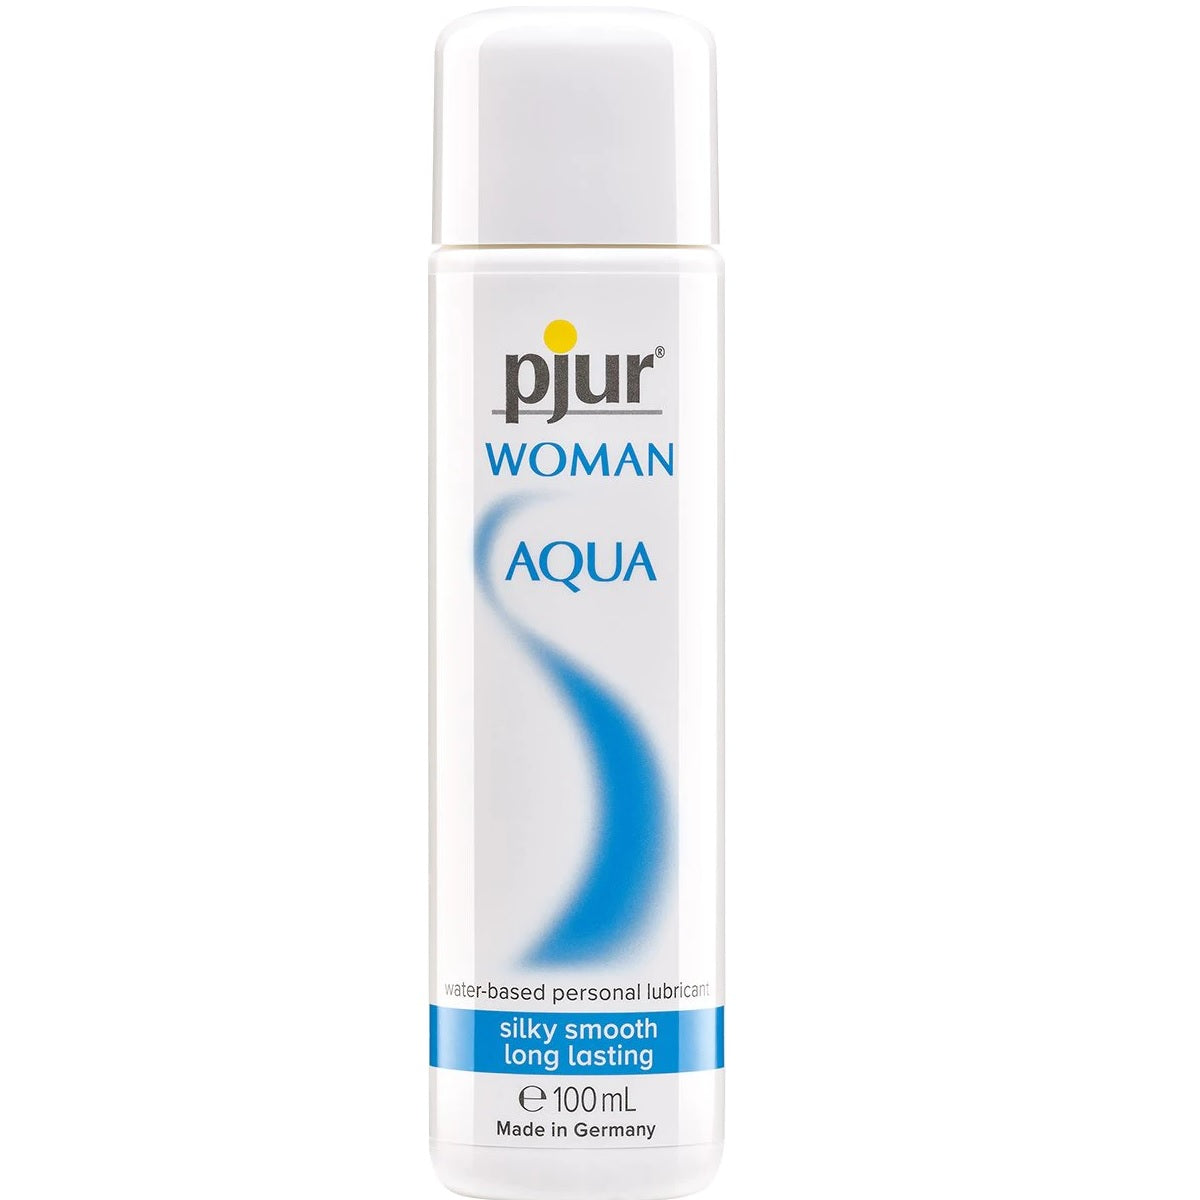 Pjur Woman Aqua Lubricant - 100ml Bottle